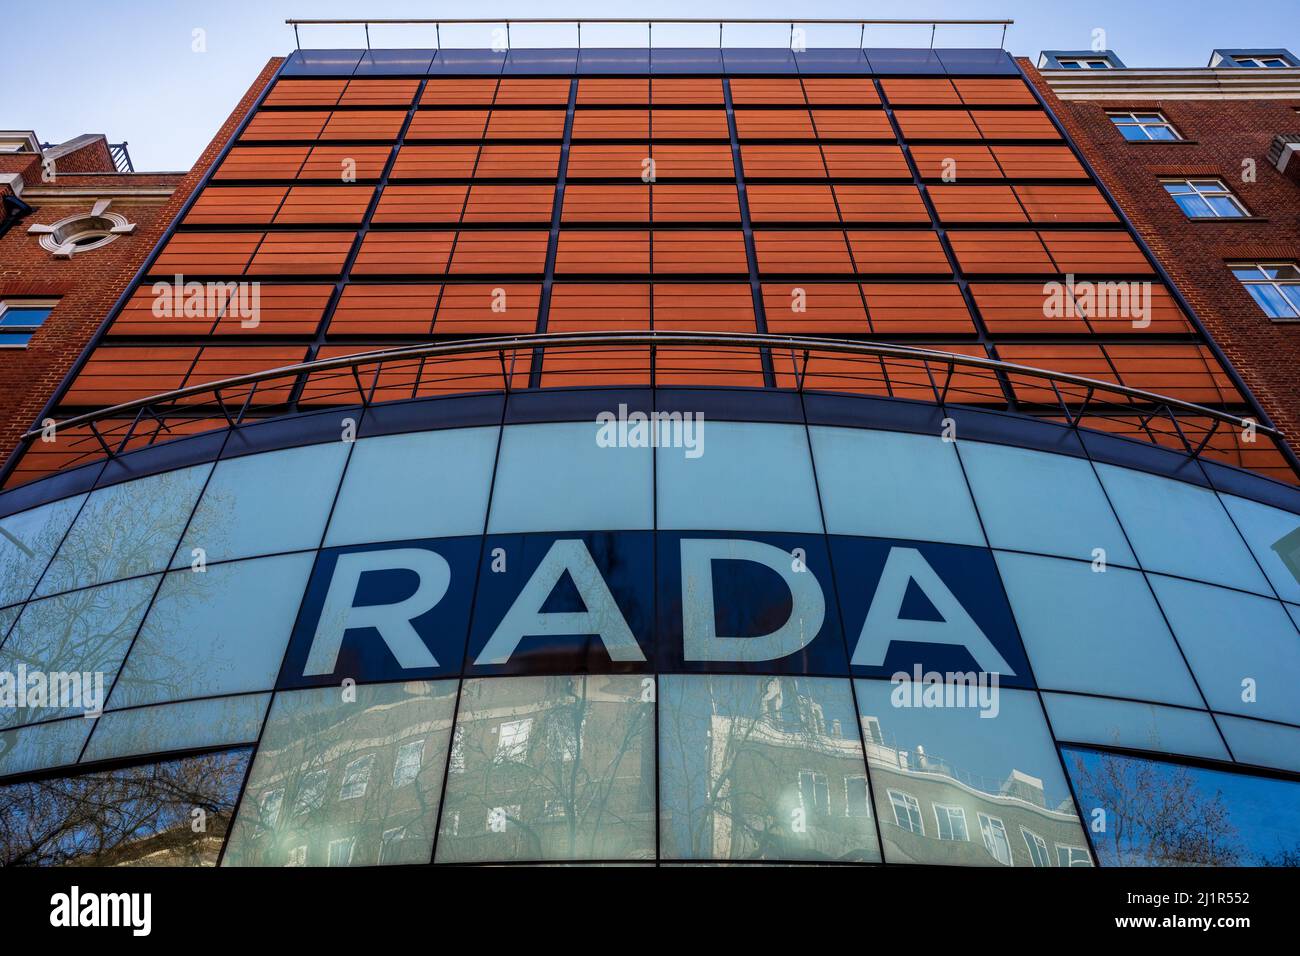 Rada London - The Royal Academy of Dramatic Art (RADA) Theatre on Malet Street in Central London. Architekten Avery Associates 2001. Stockfoto